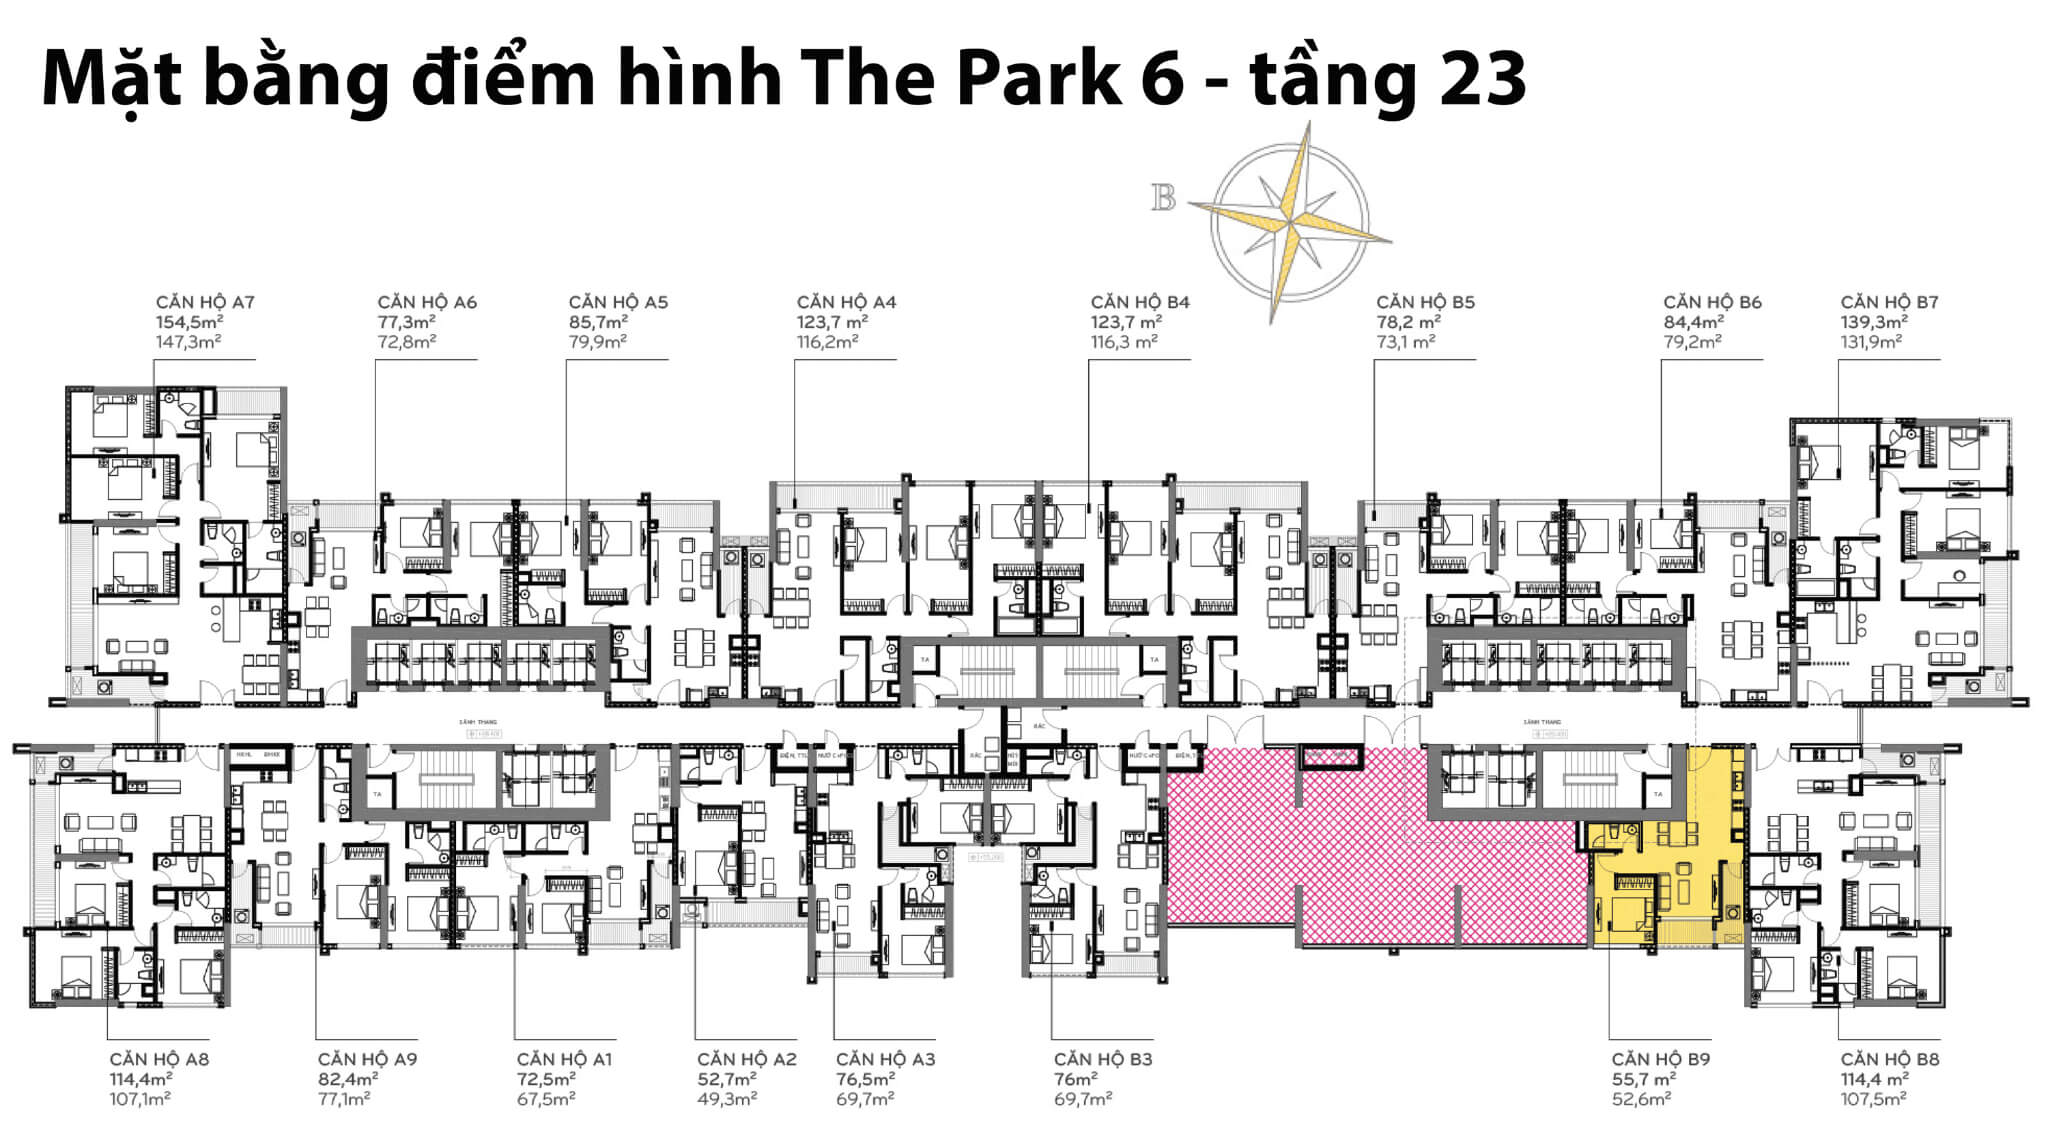 Mặt bằng layout tòa The Park 6 tầng 23 tại Vinhomes Central Park